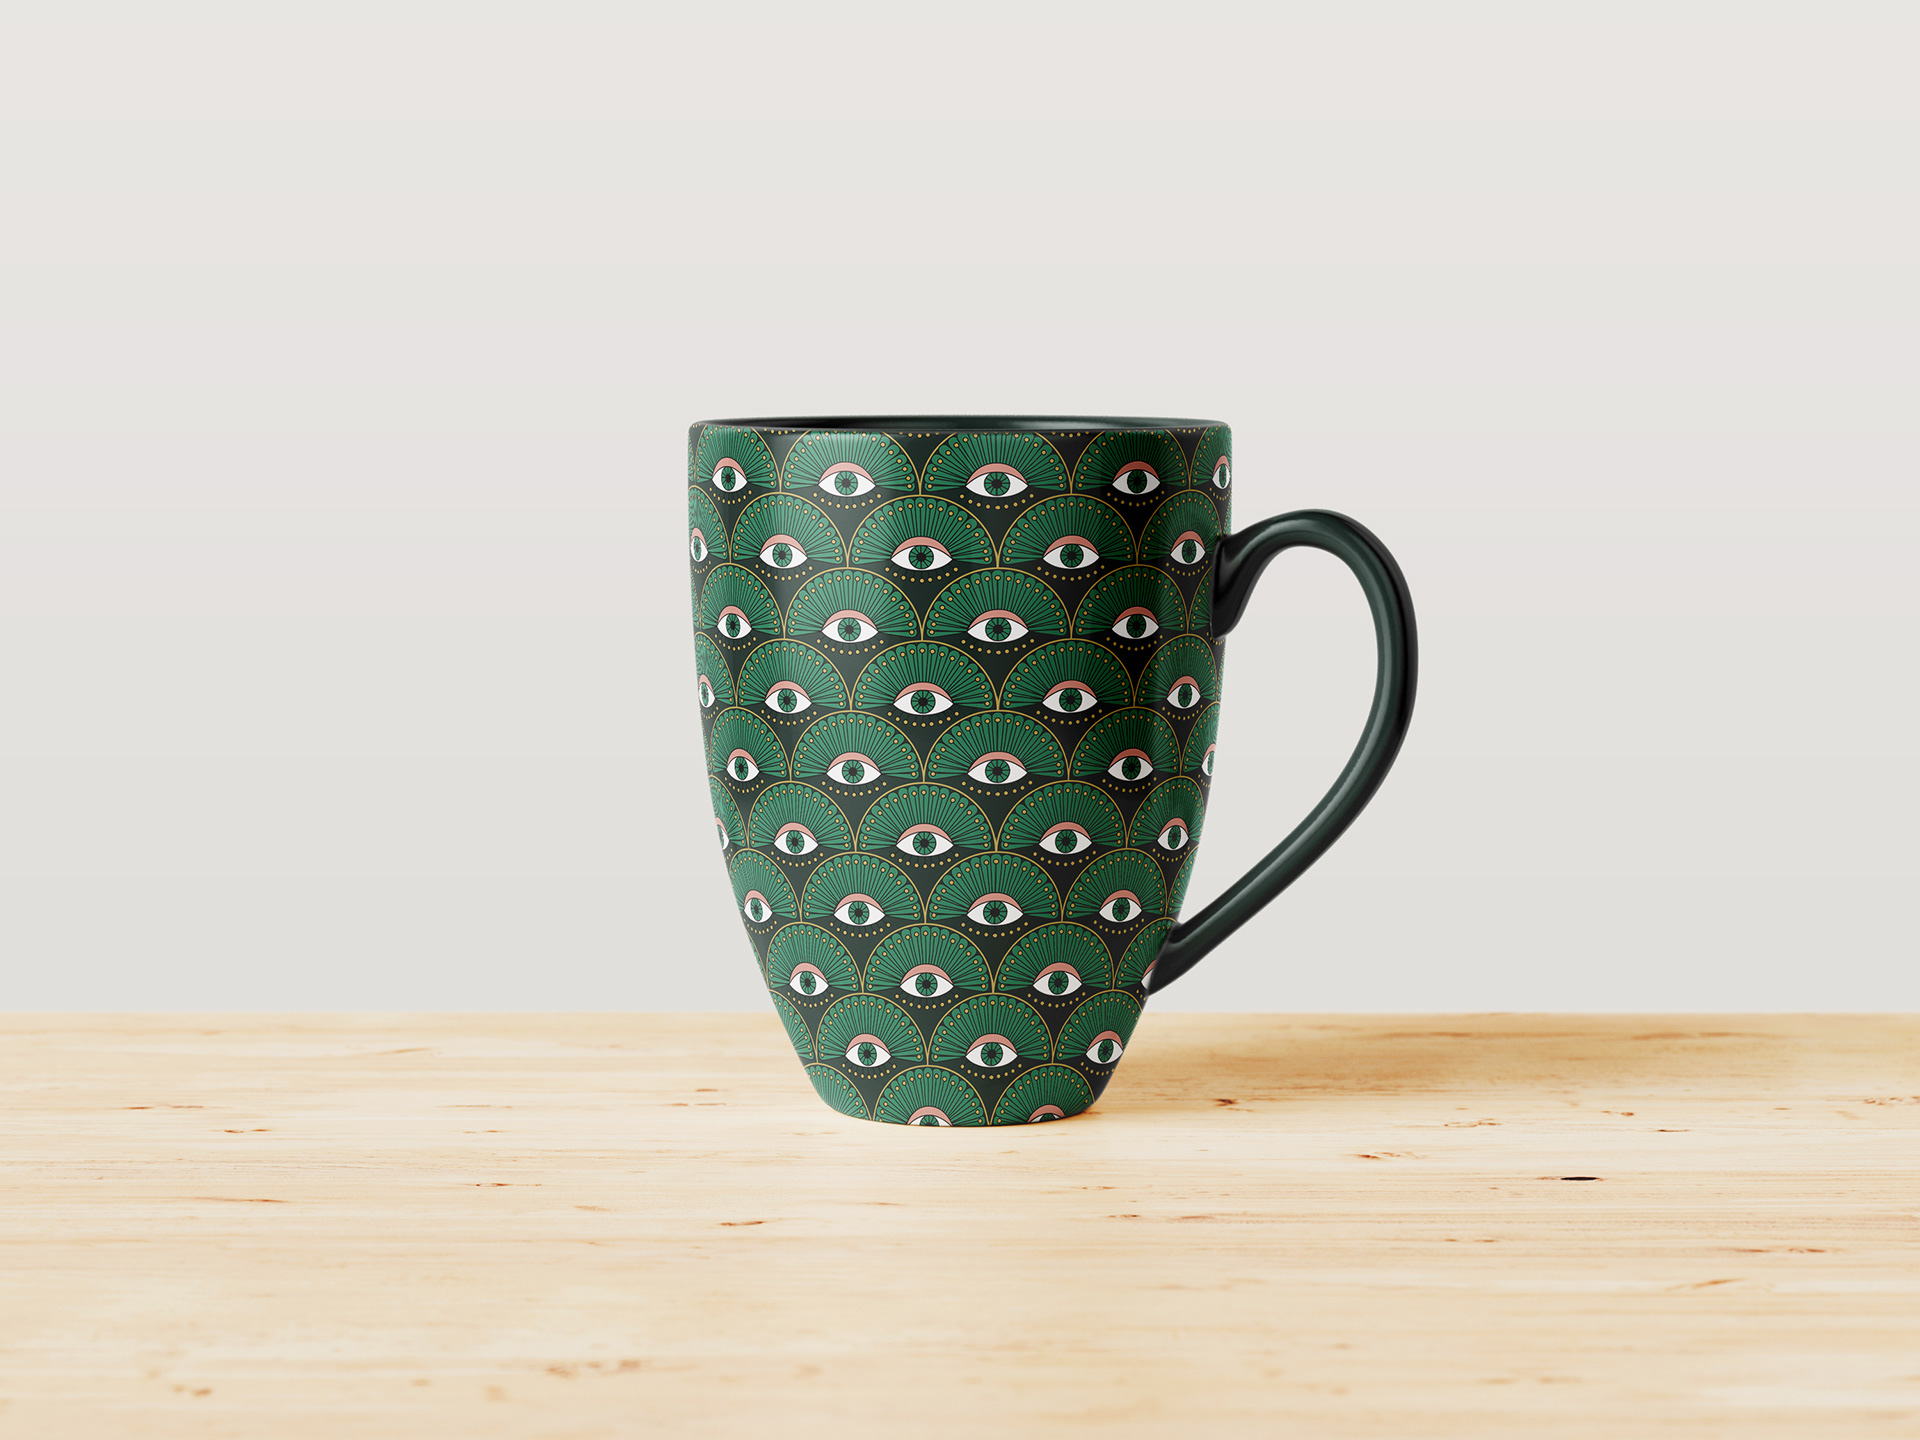 Geometric-inspired design on mug